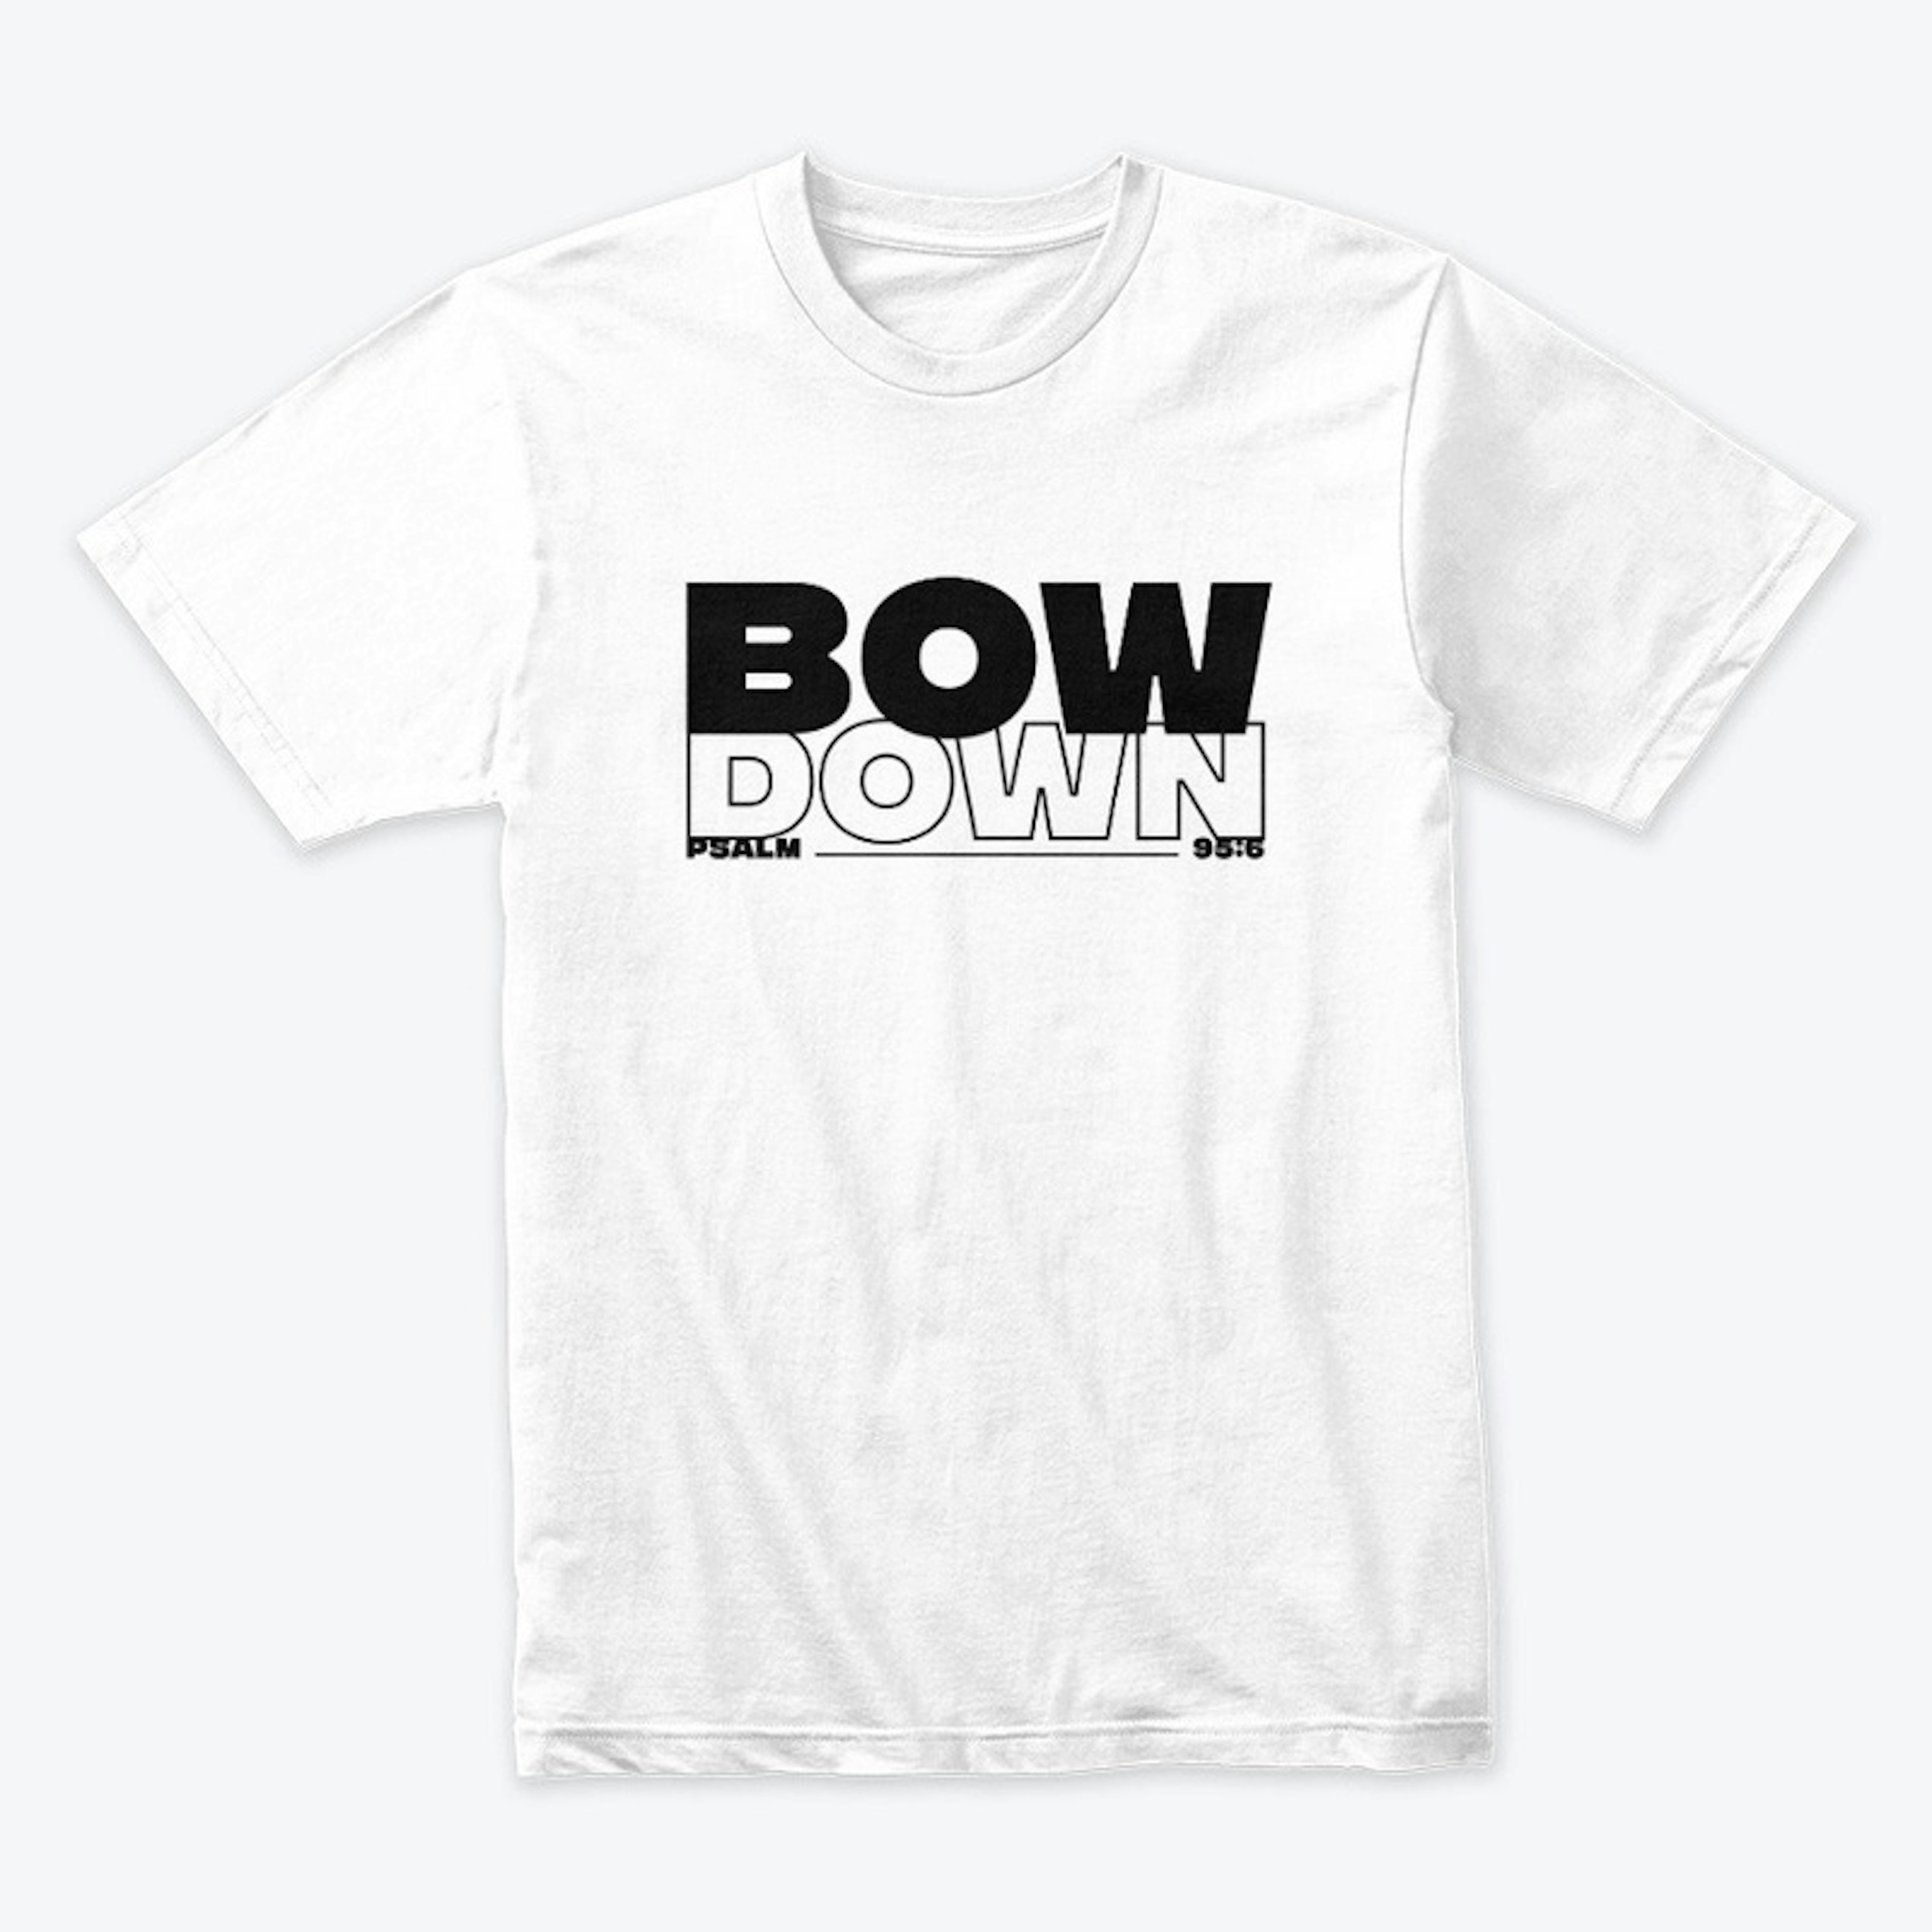 Classic Bow Down Tee (White)